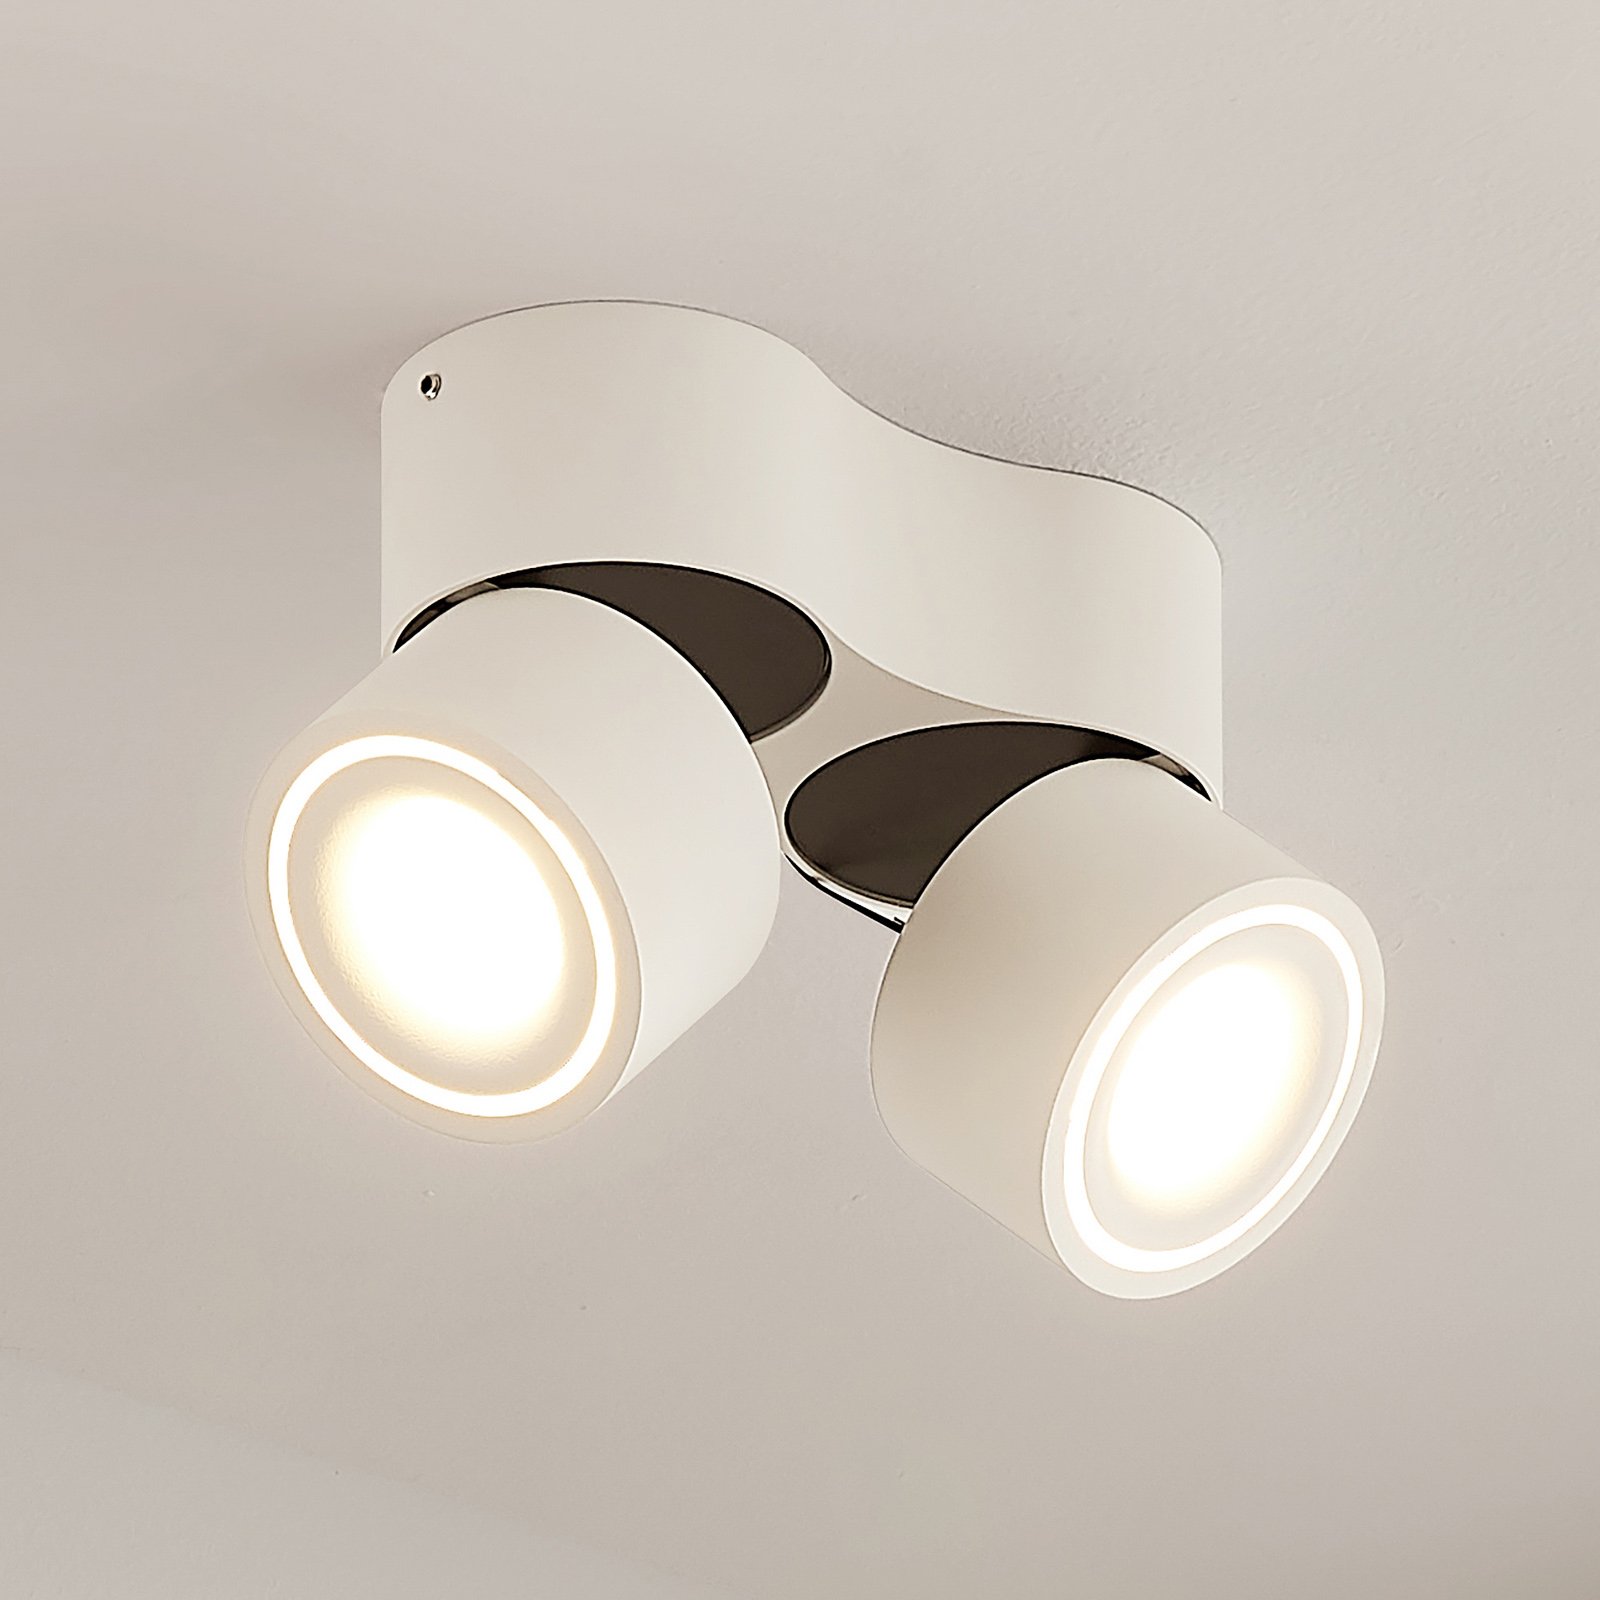 Arcchio Rotari LED stropné svetlo, 2 svetlá/biela